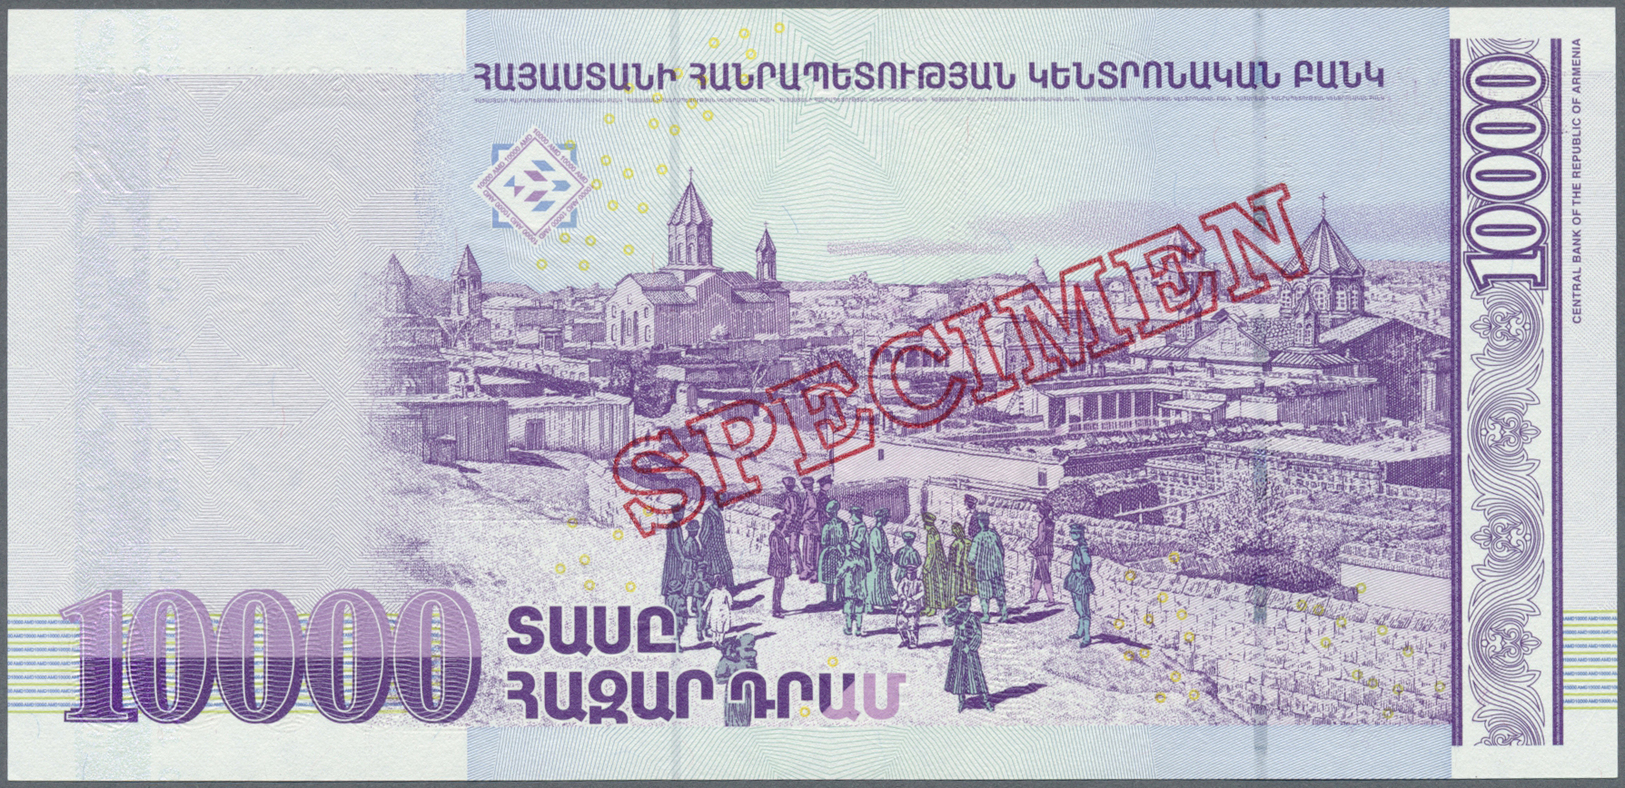 00051 Armenia / Armenien: Central Bank Of The Republic Of Armenia 10.000 Dram 2003 SPECIMEN, P.52as, With Red Overprint - Armenia